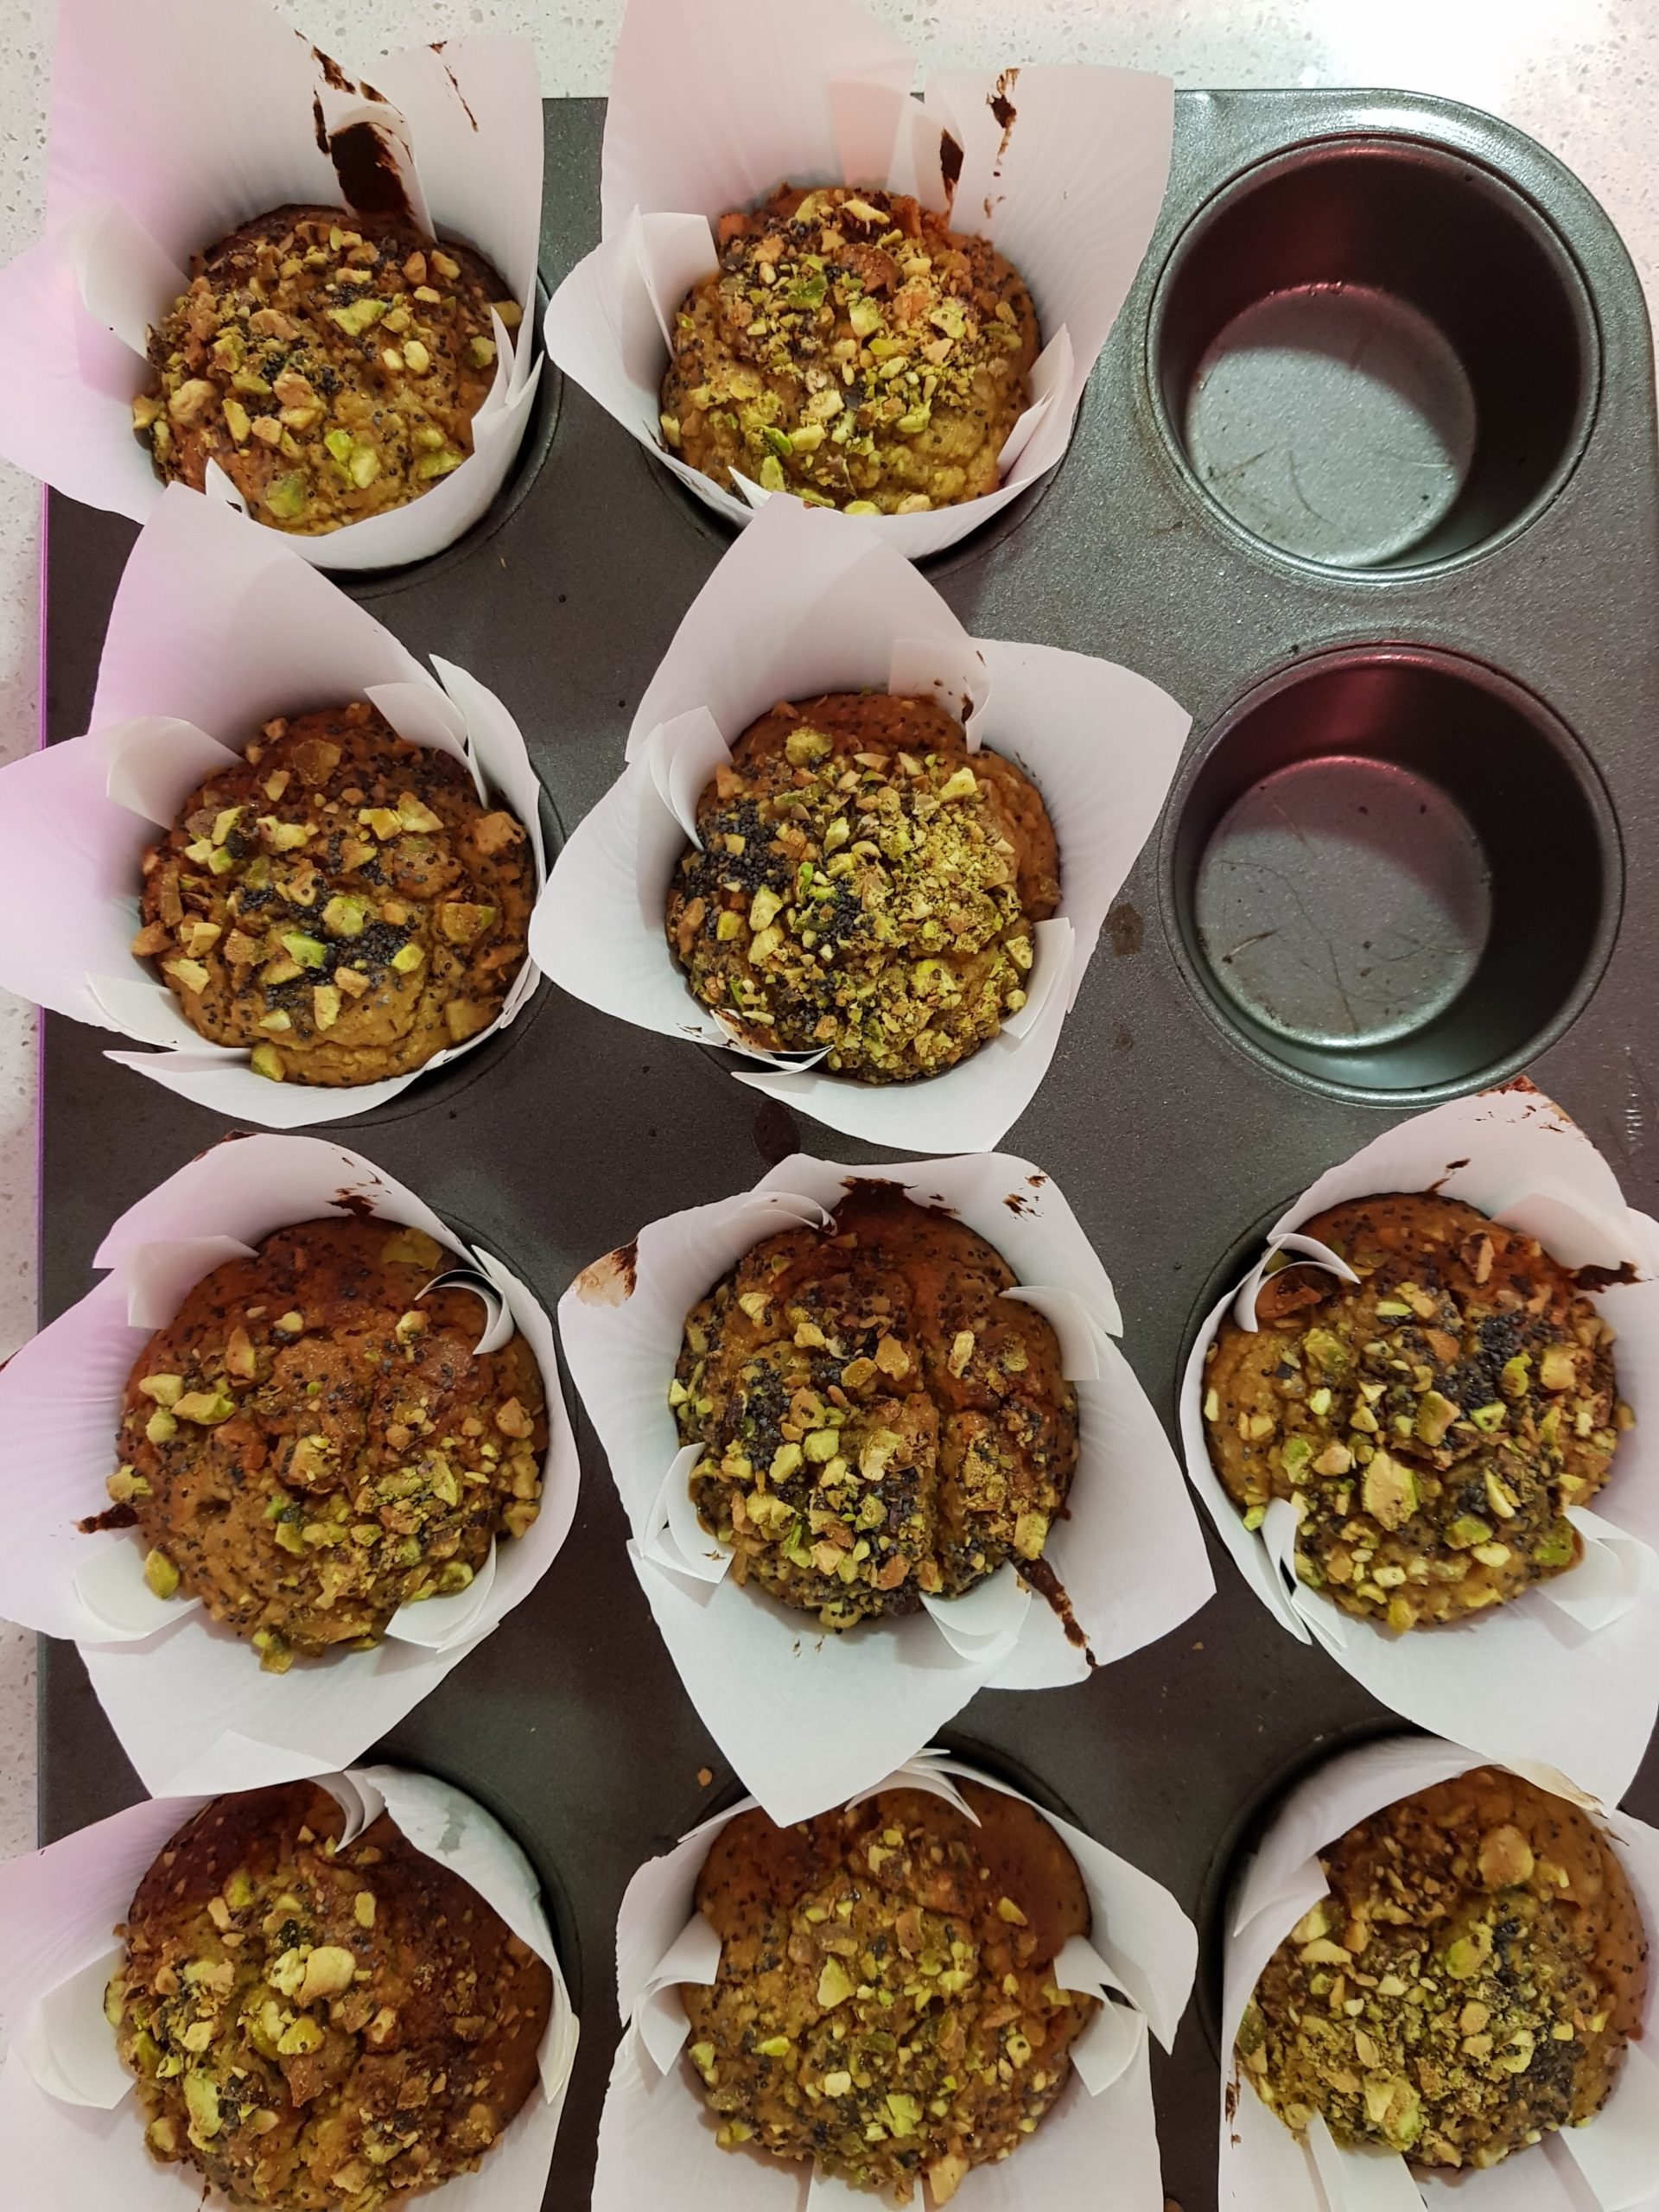 Orange poppy seed pistachio muffins